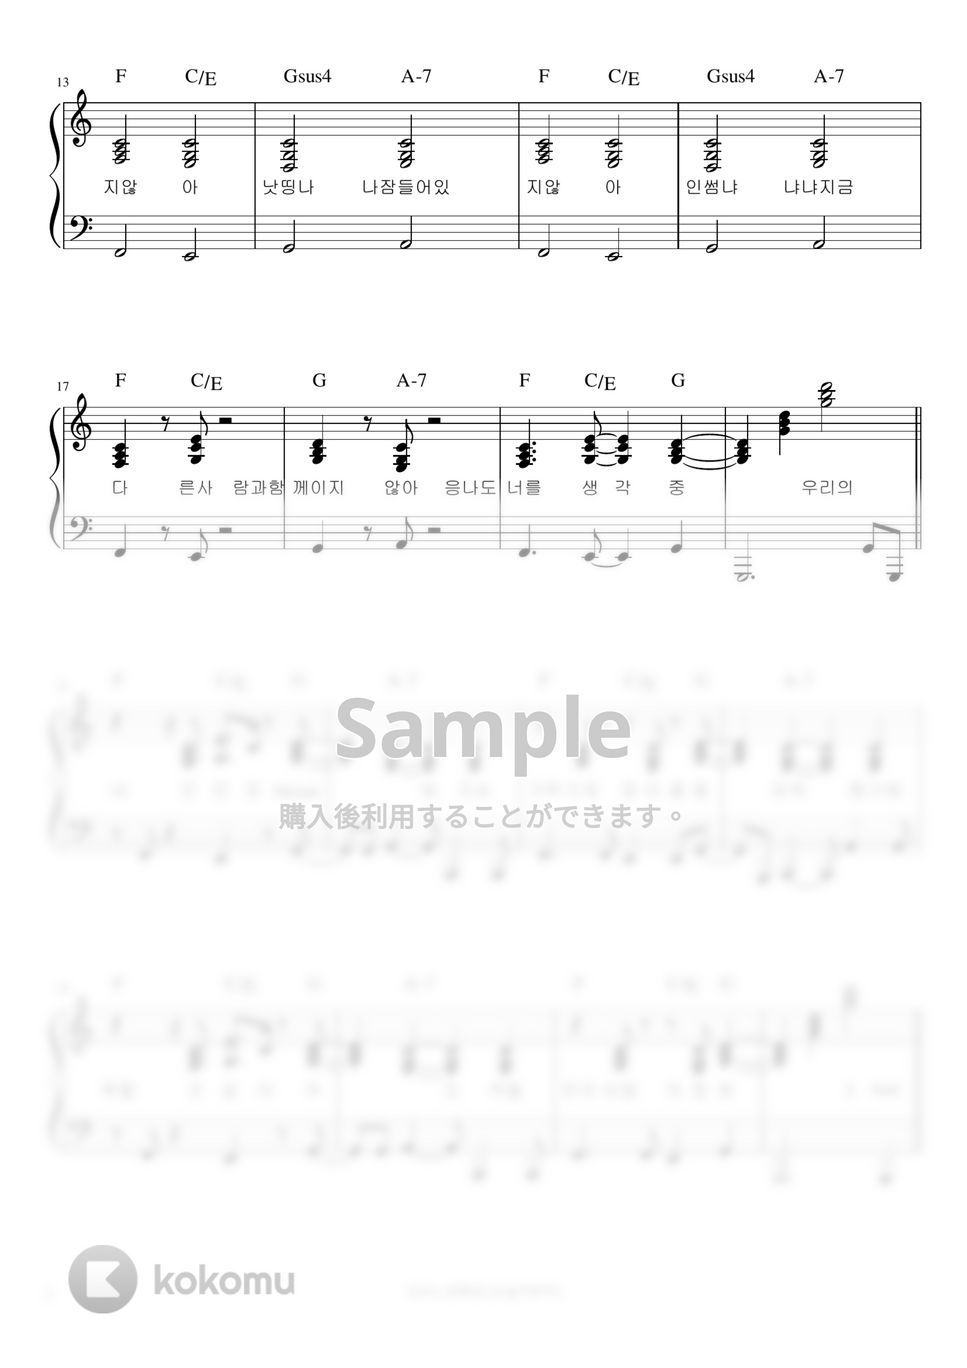 IU - Blueming (伴奏楽譜) by pianojeongryujang